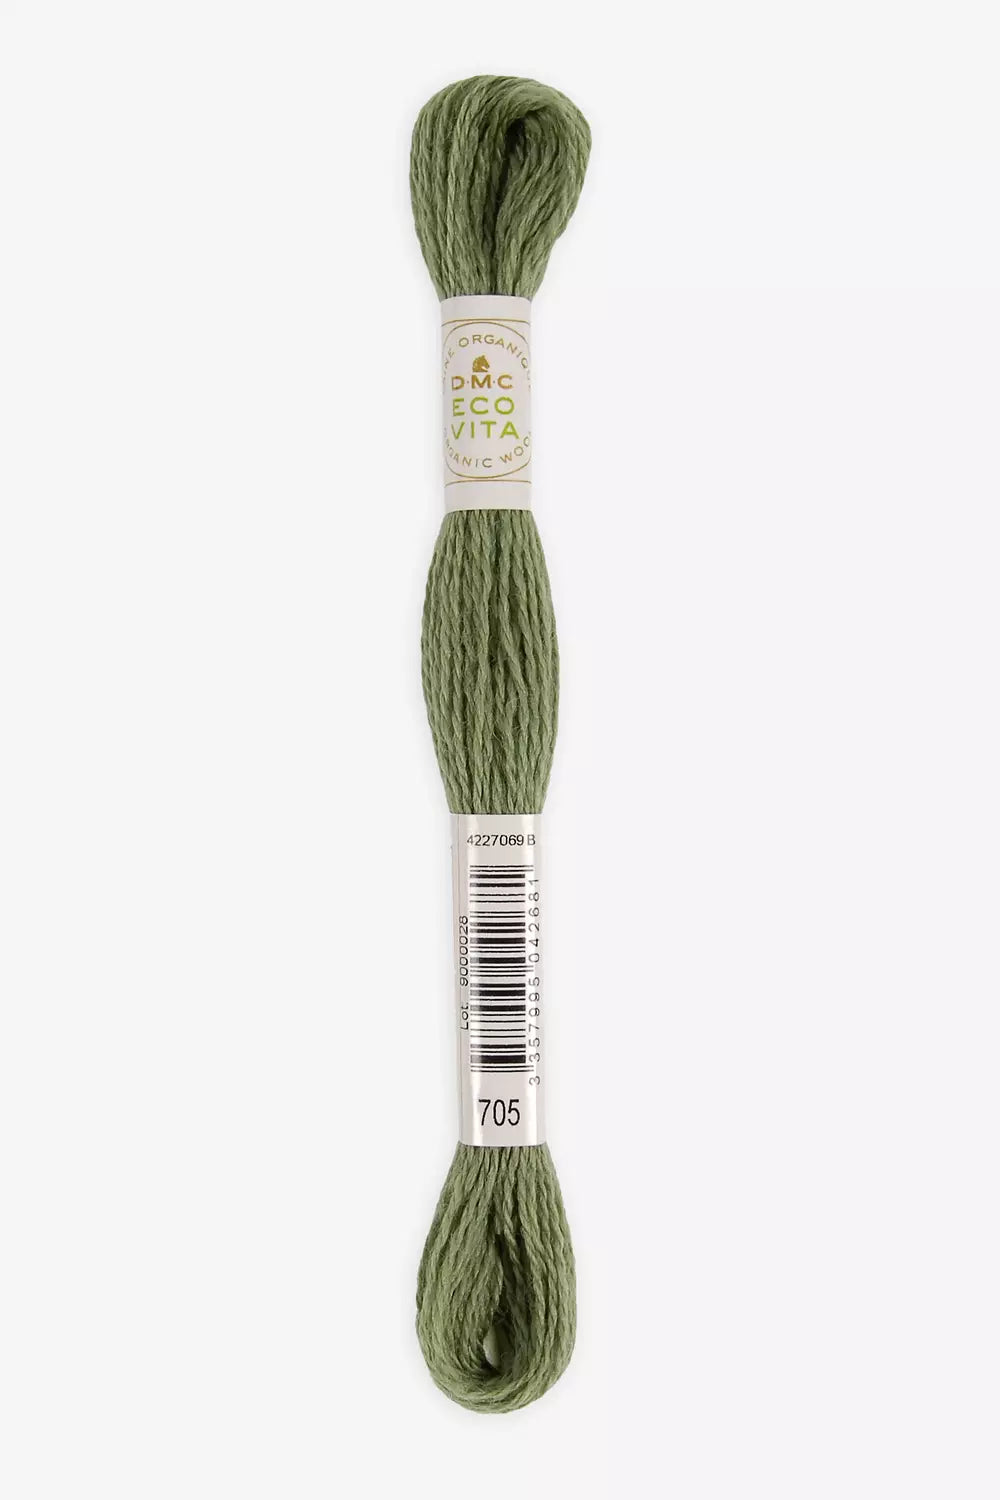 DMC Eco Vita Wool Thread 705